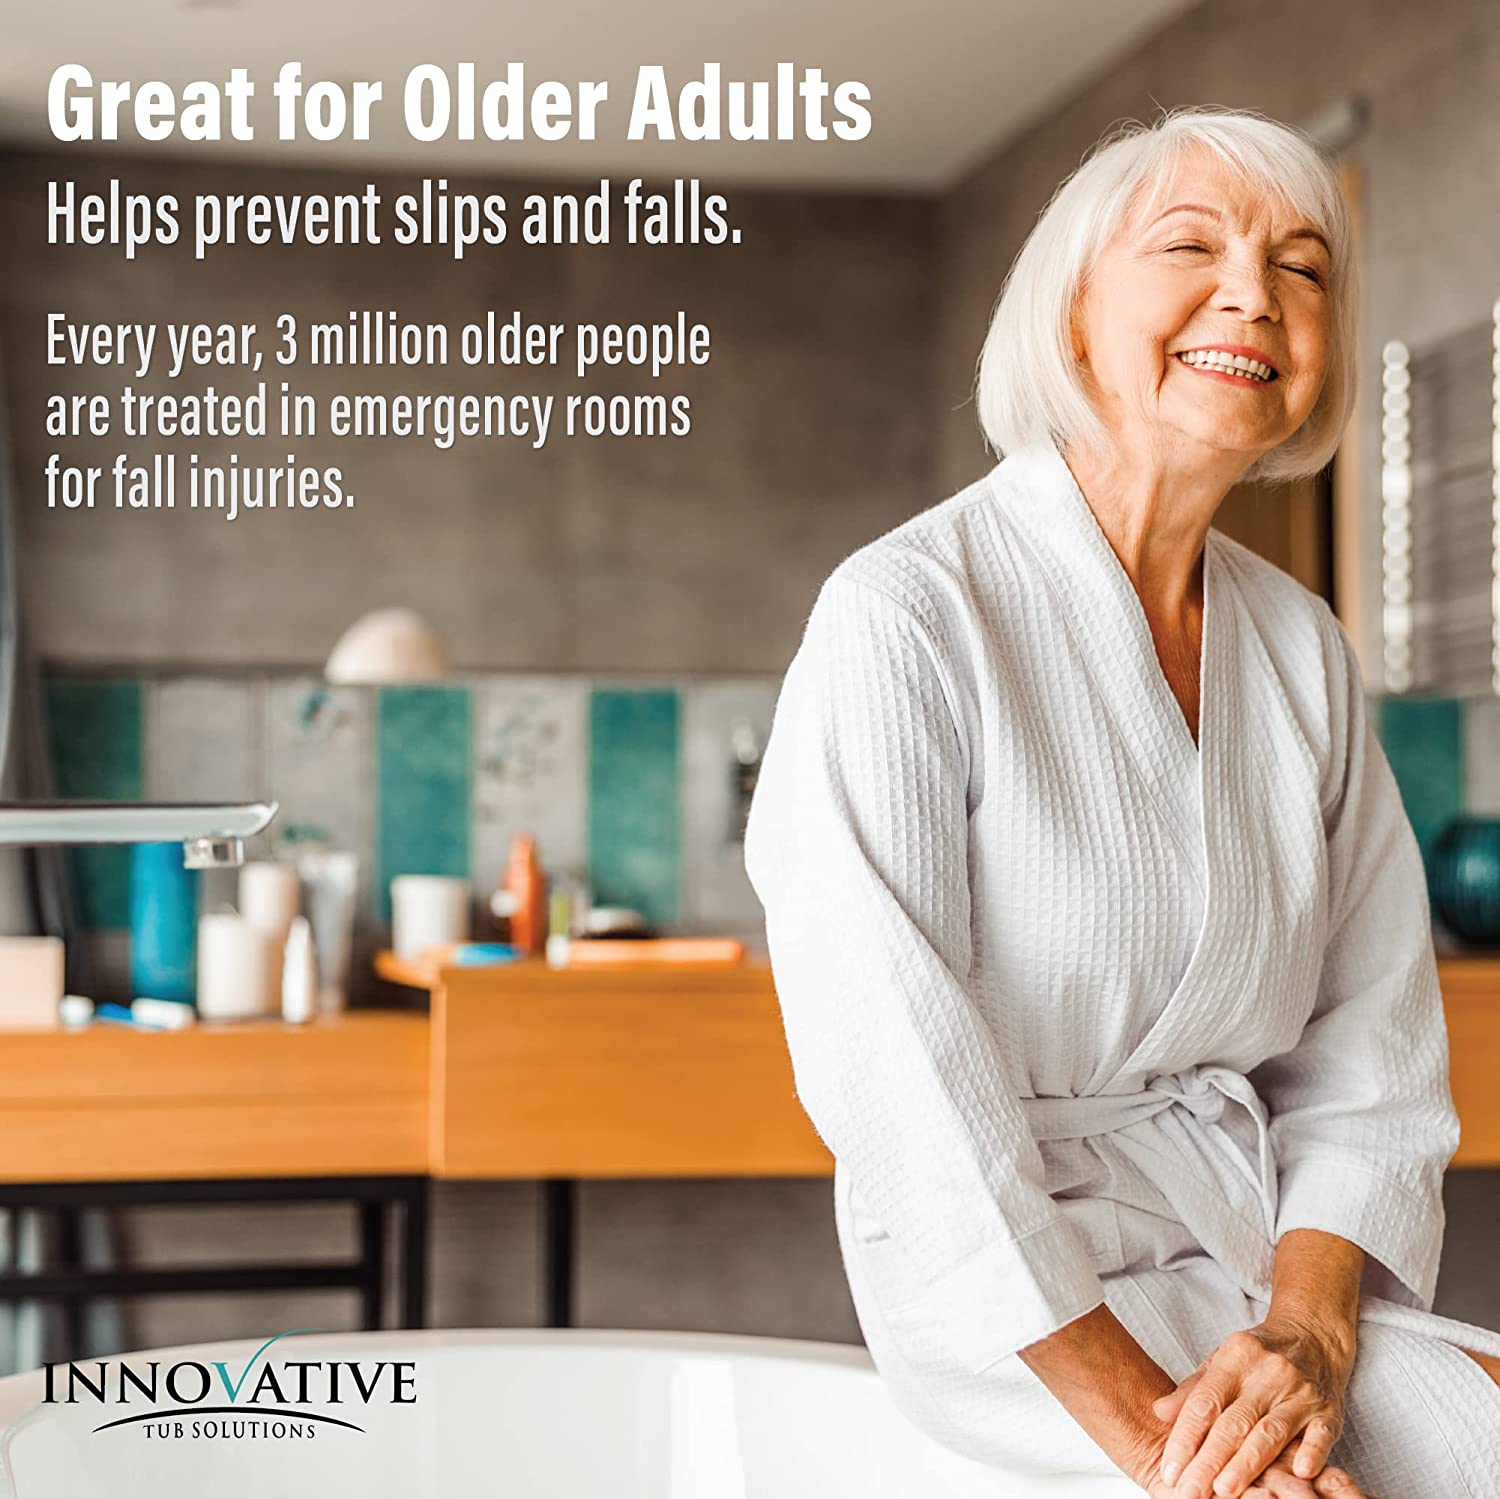 https://www.innovativetubsolutions.com/wp-content/uploads/2019/06/great-for-older-adults.jpg